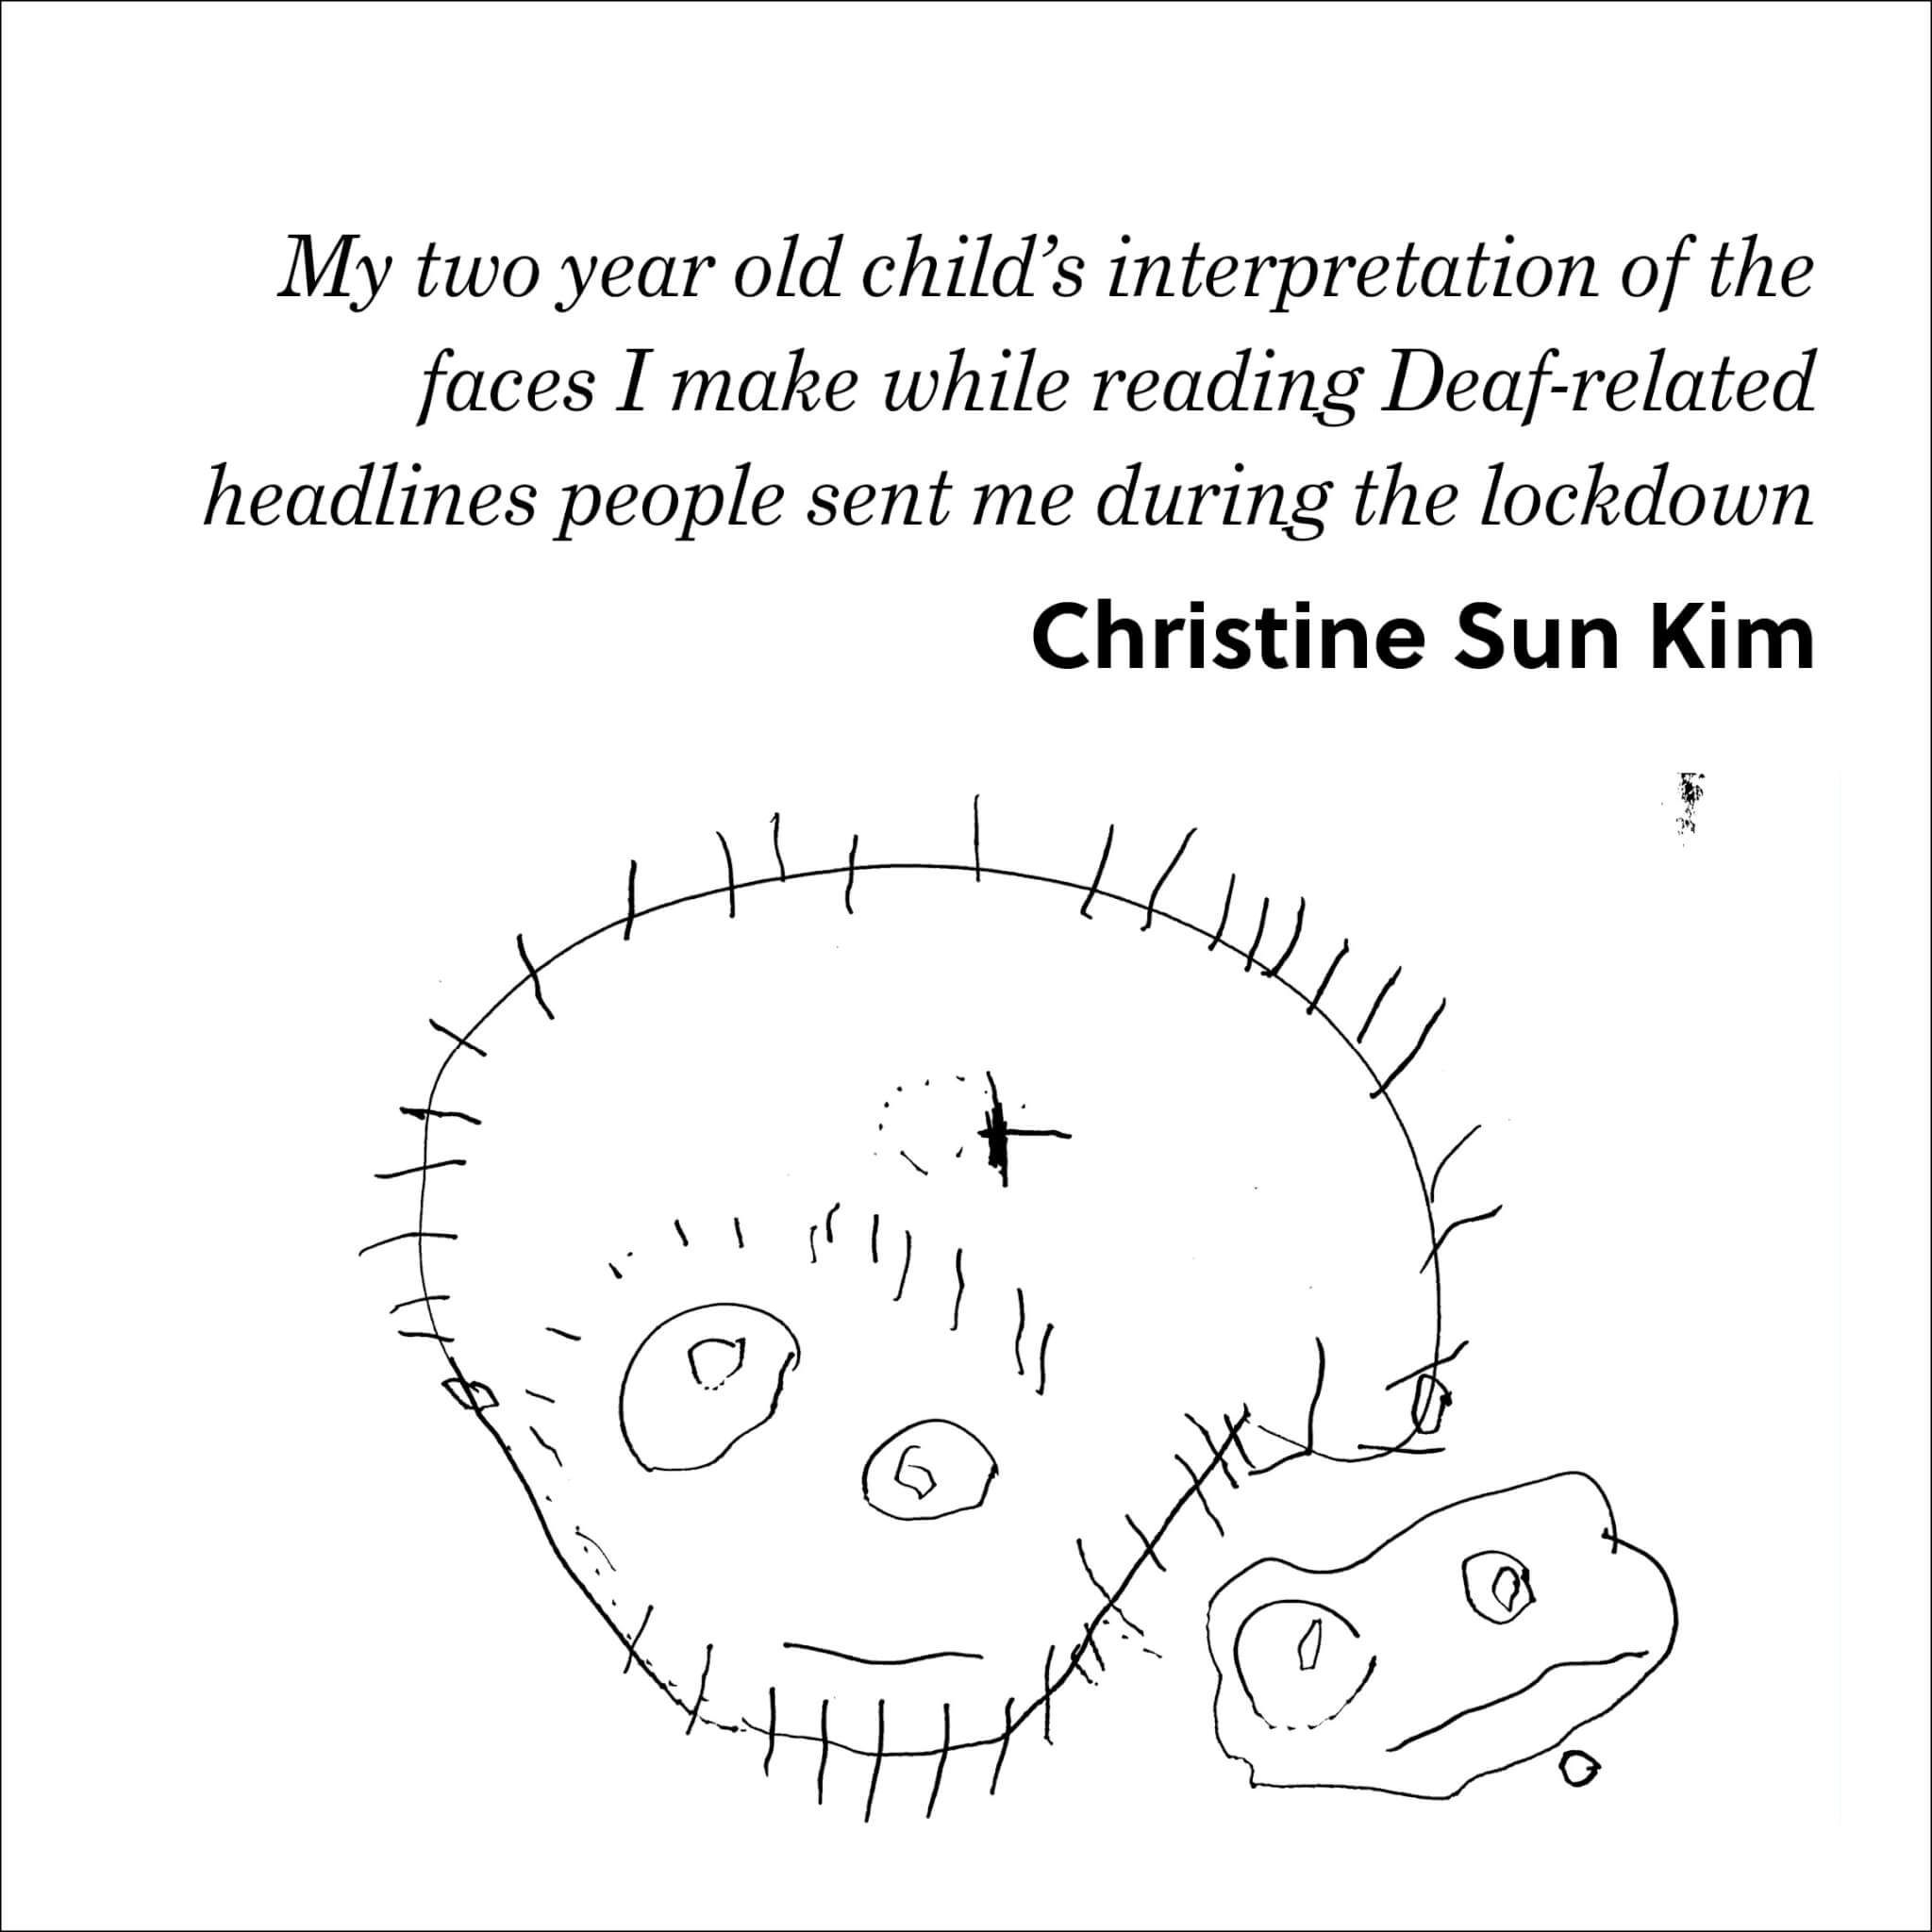 Week 1: Christine Sun Kim